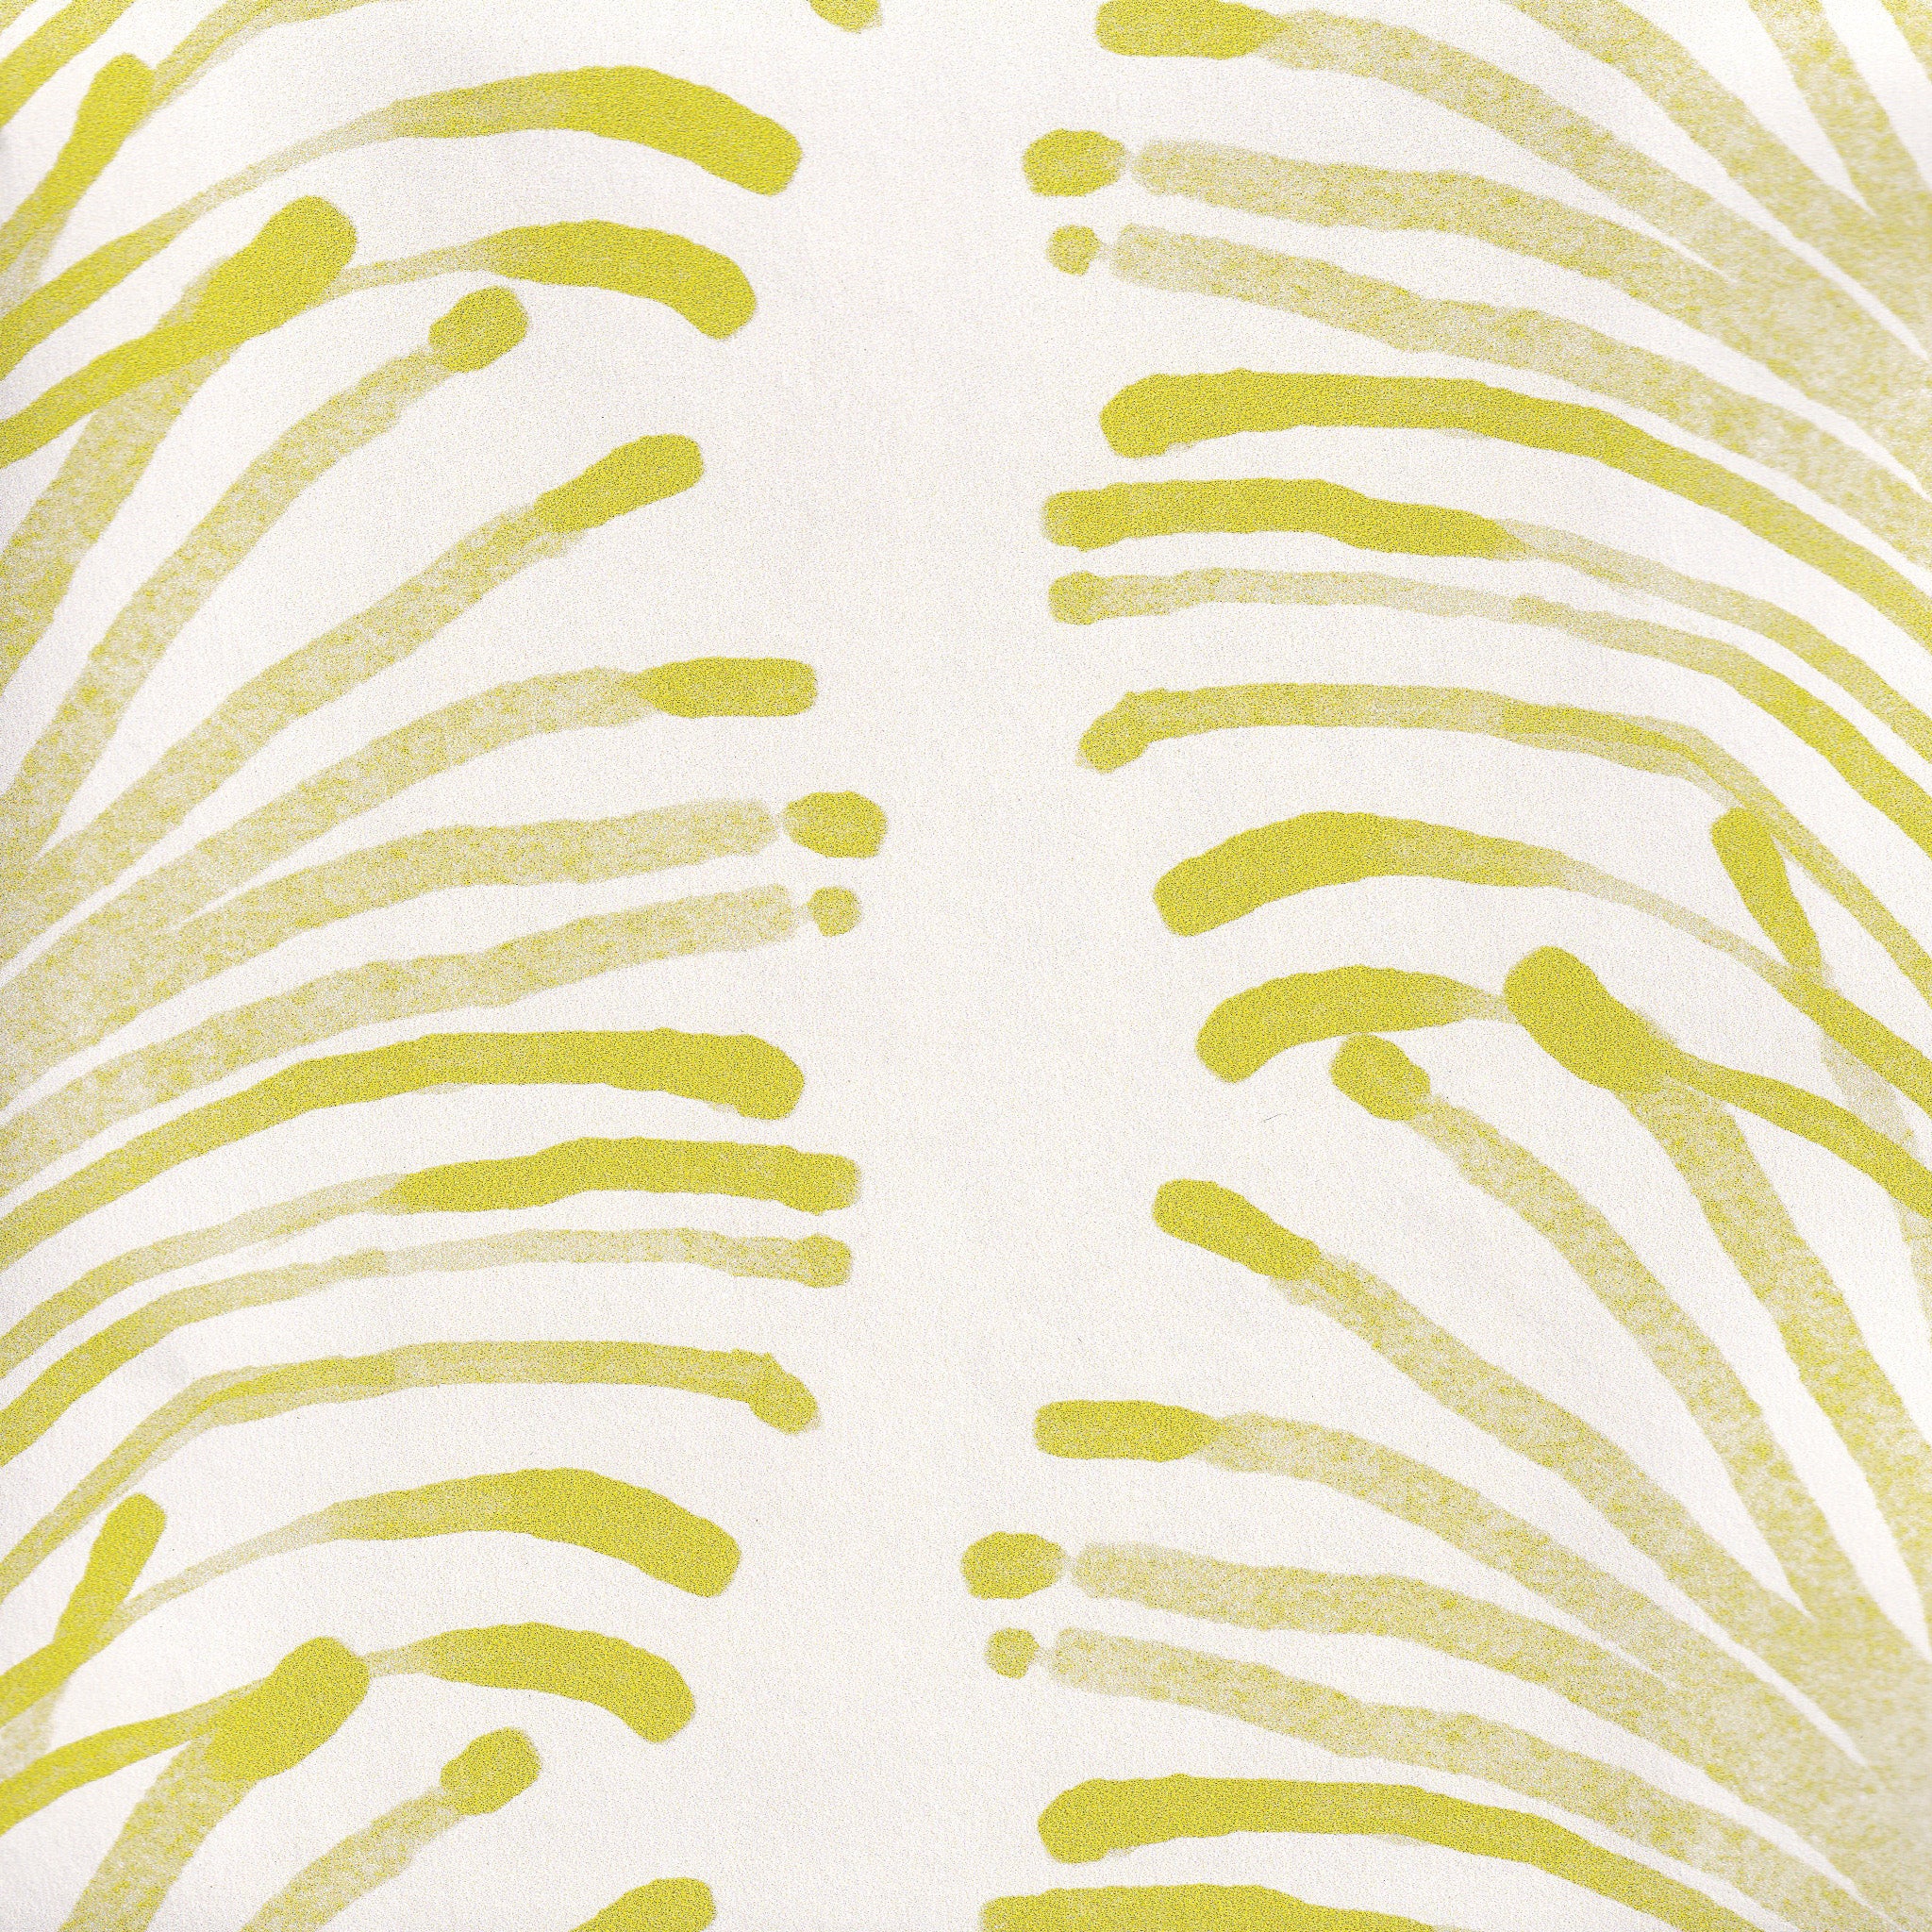 Yellow Stripe Chartreuse Print Close-Up